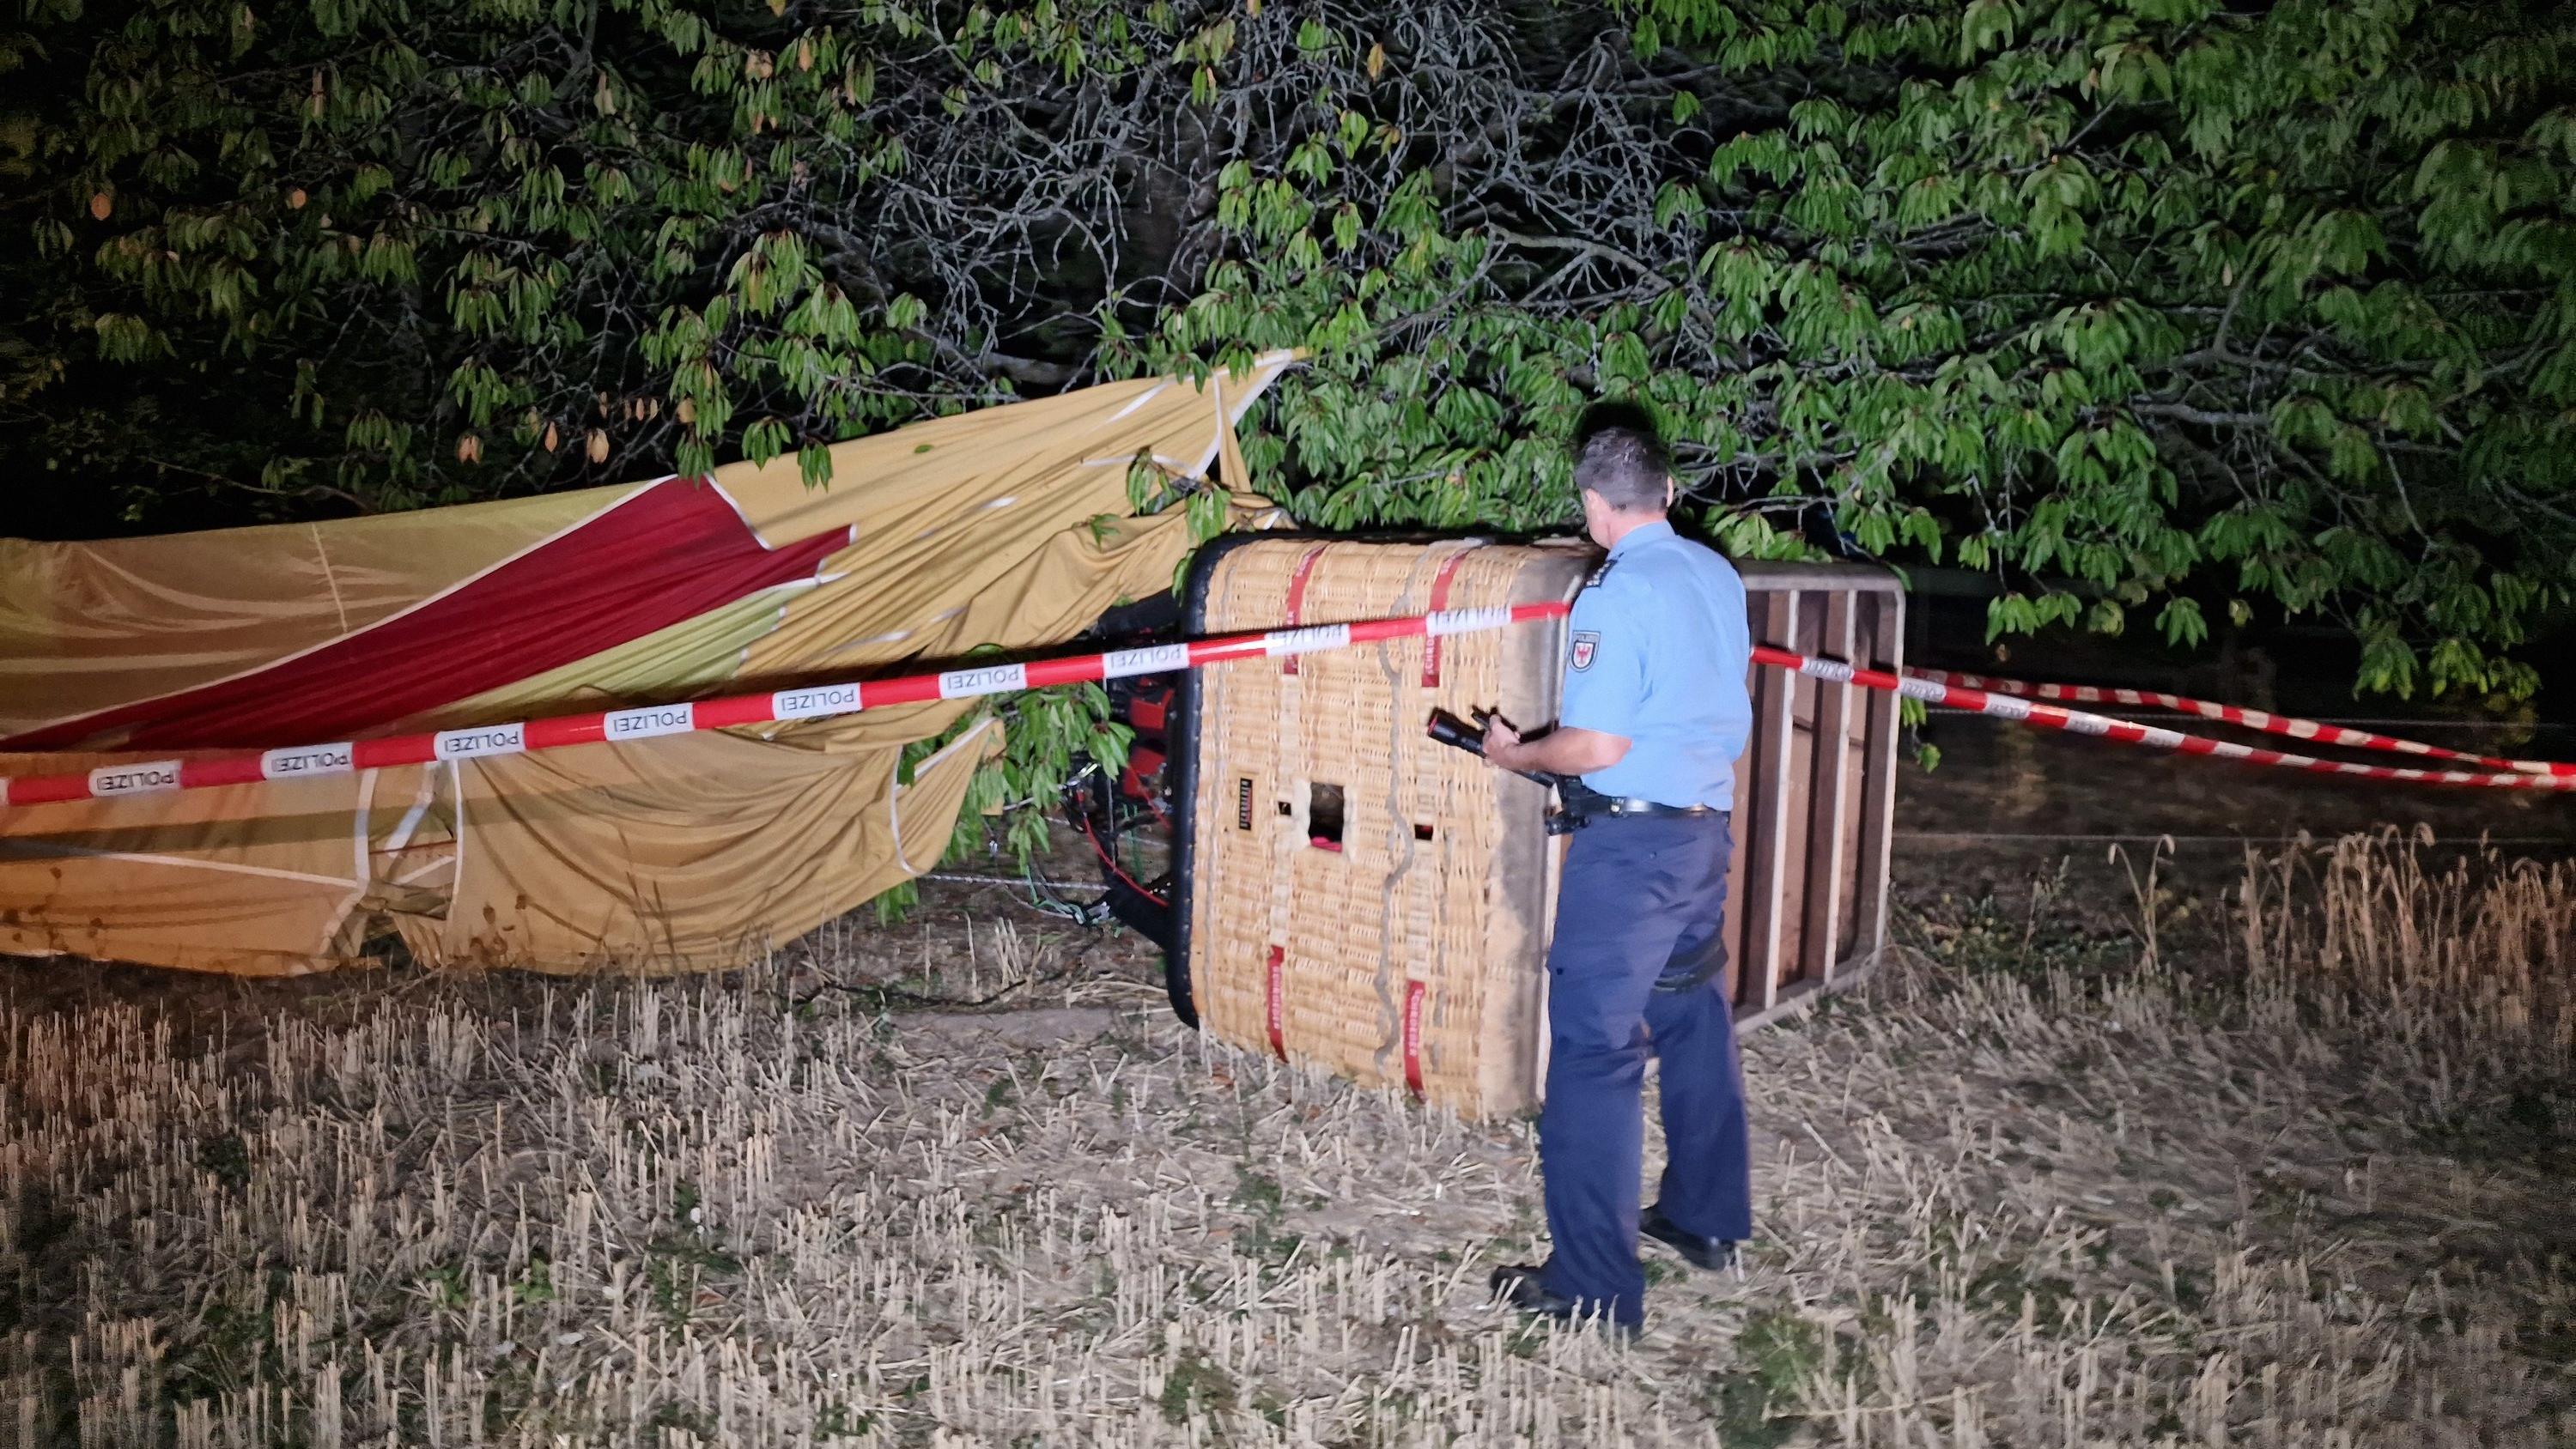 Tödlicher Unfall mit Heißluftballon in Beelitz